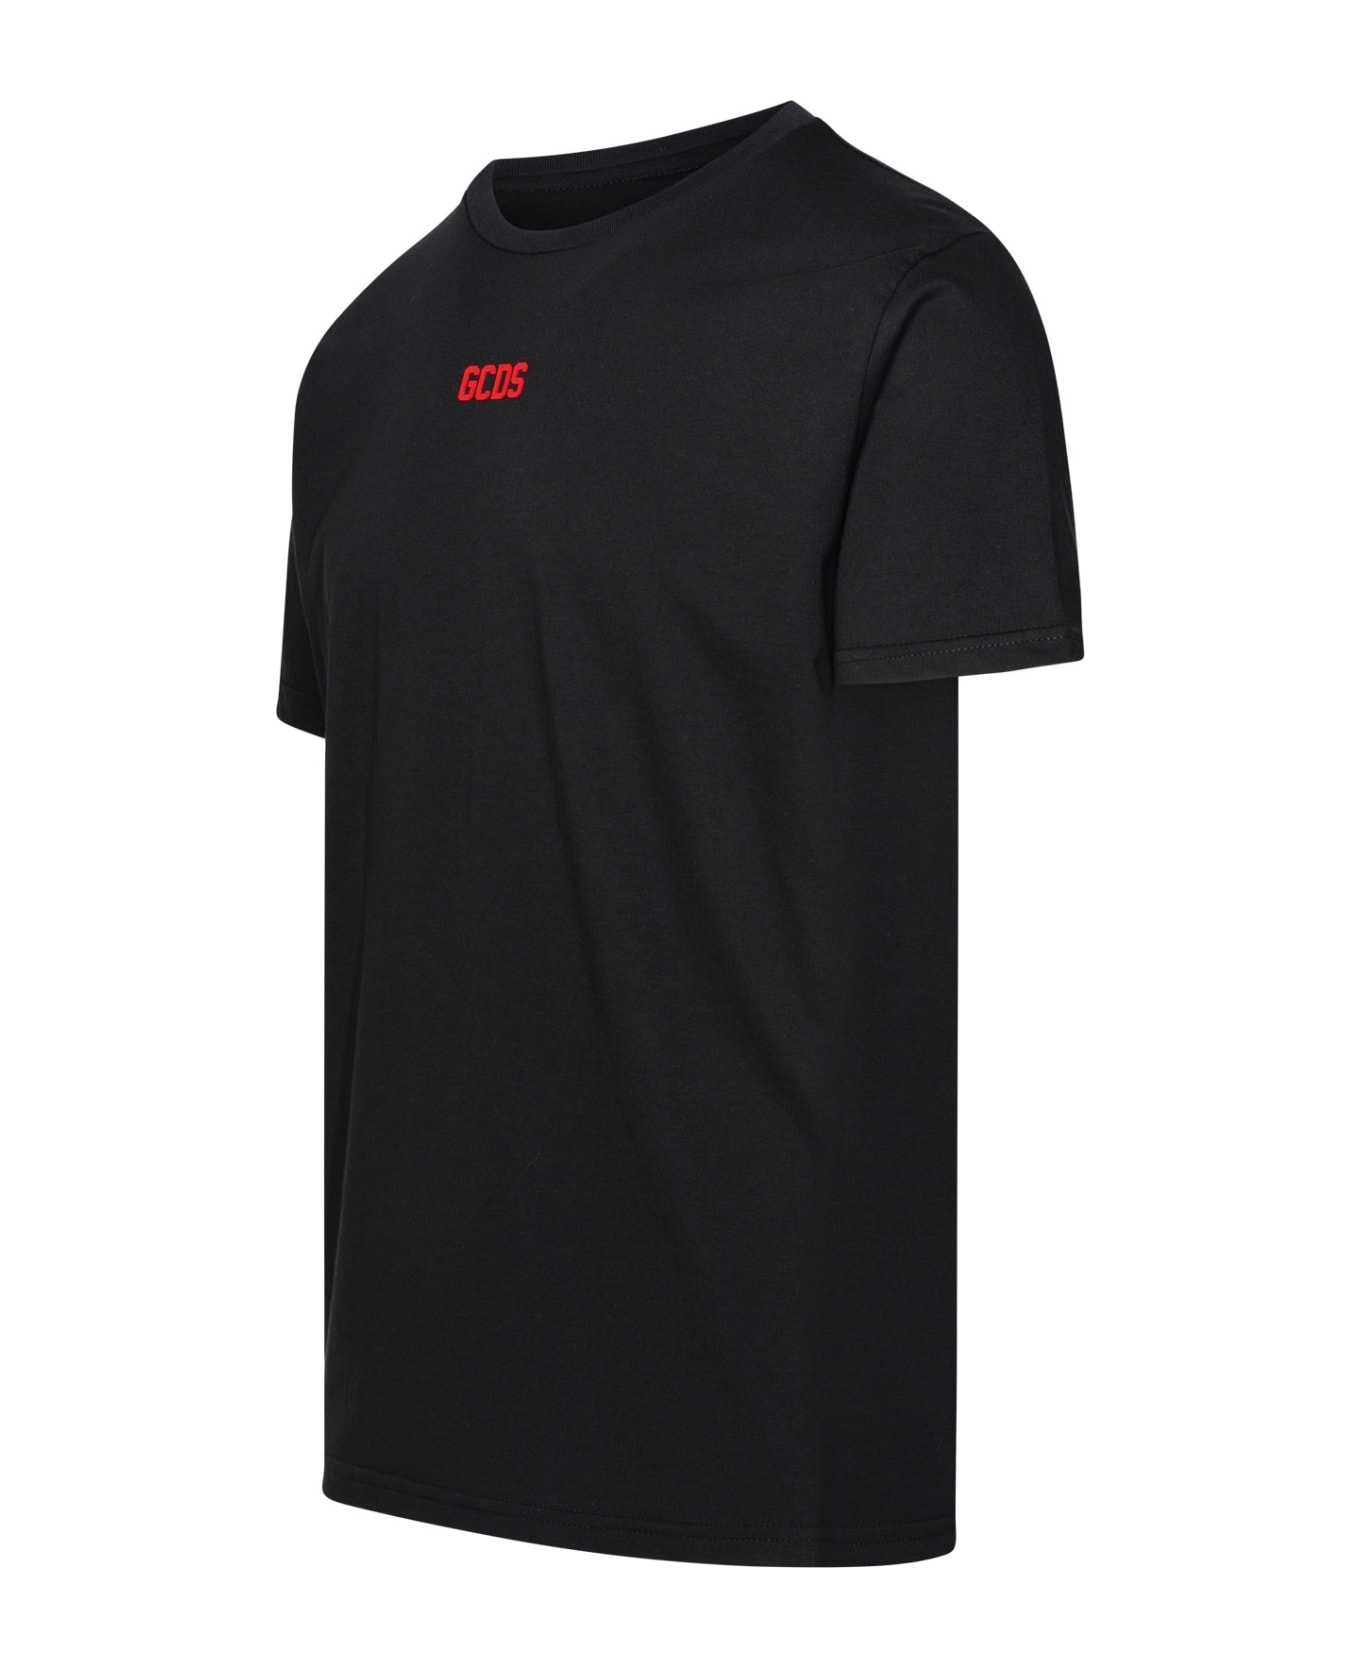 GCDS Black Cotton T-shirt - Black